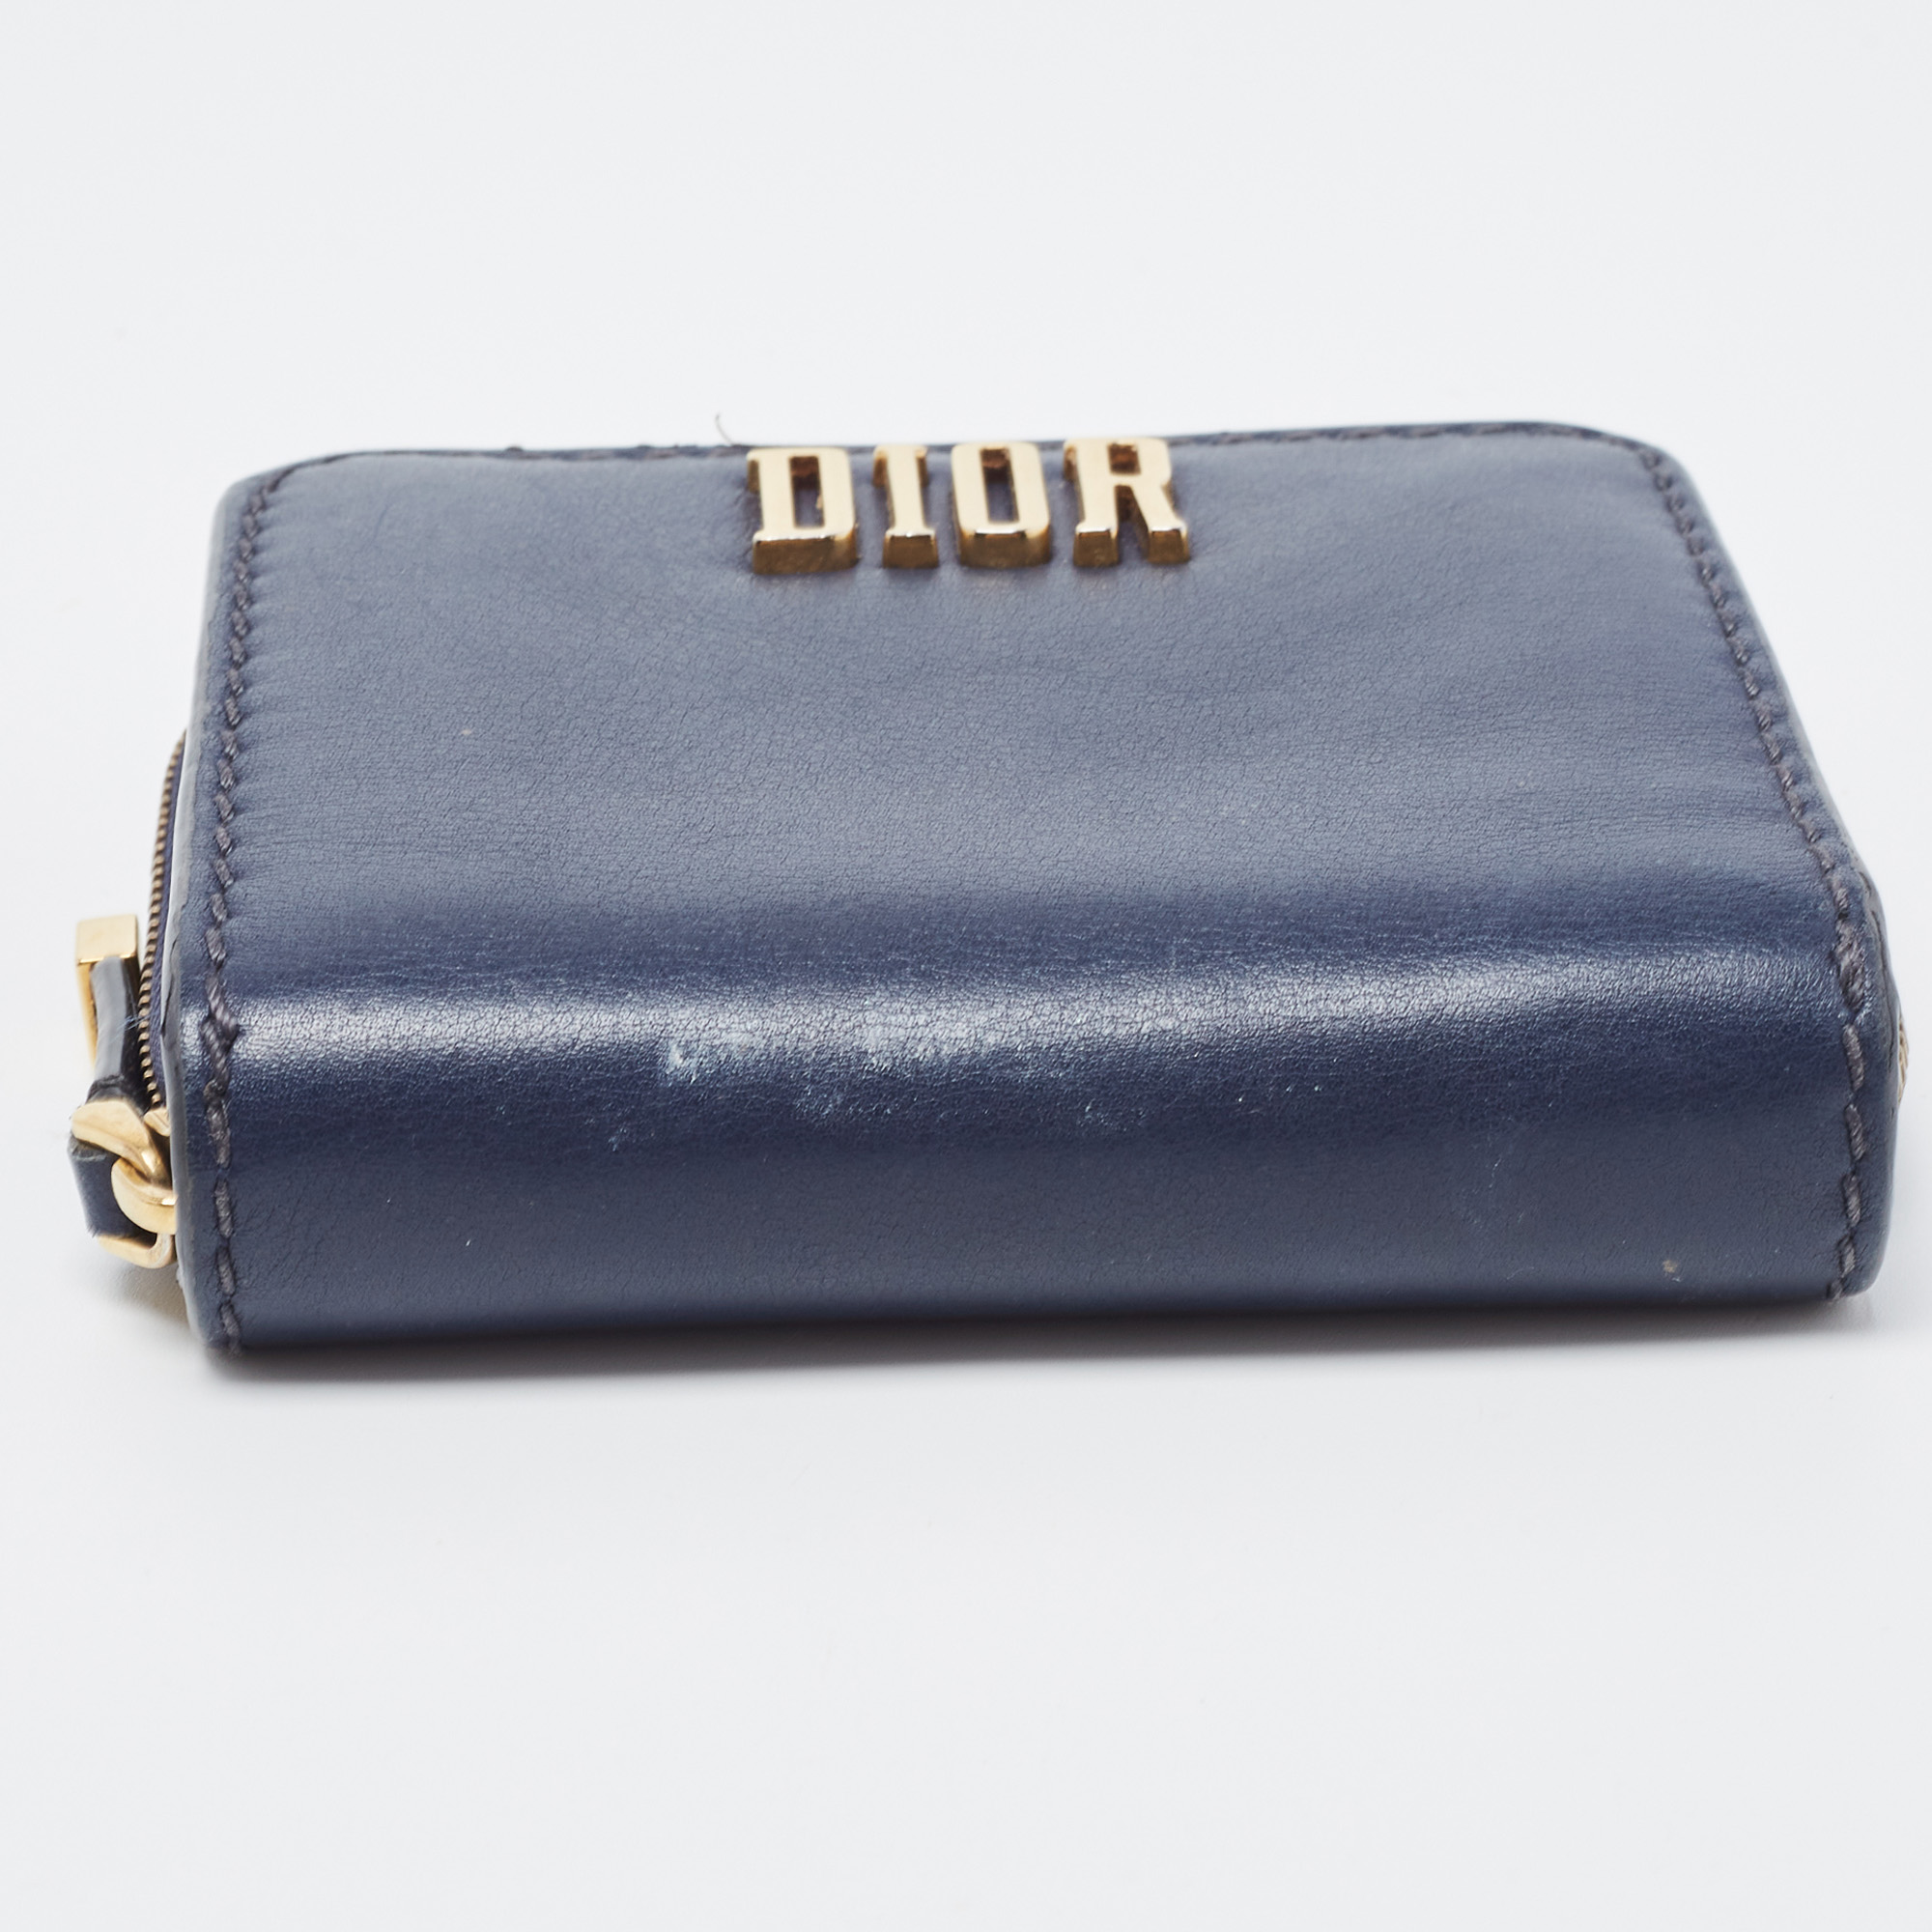 Dior Navy Blue Leather Dior D Fence Zip Wallet